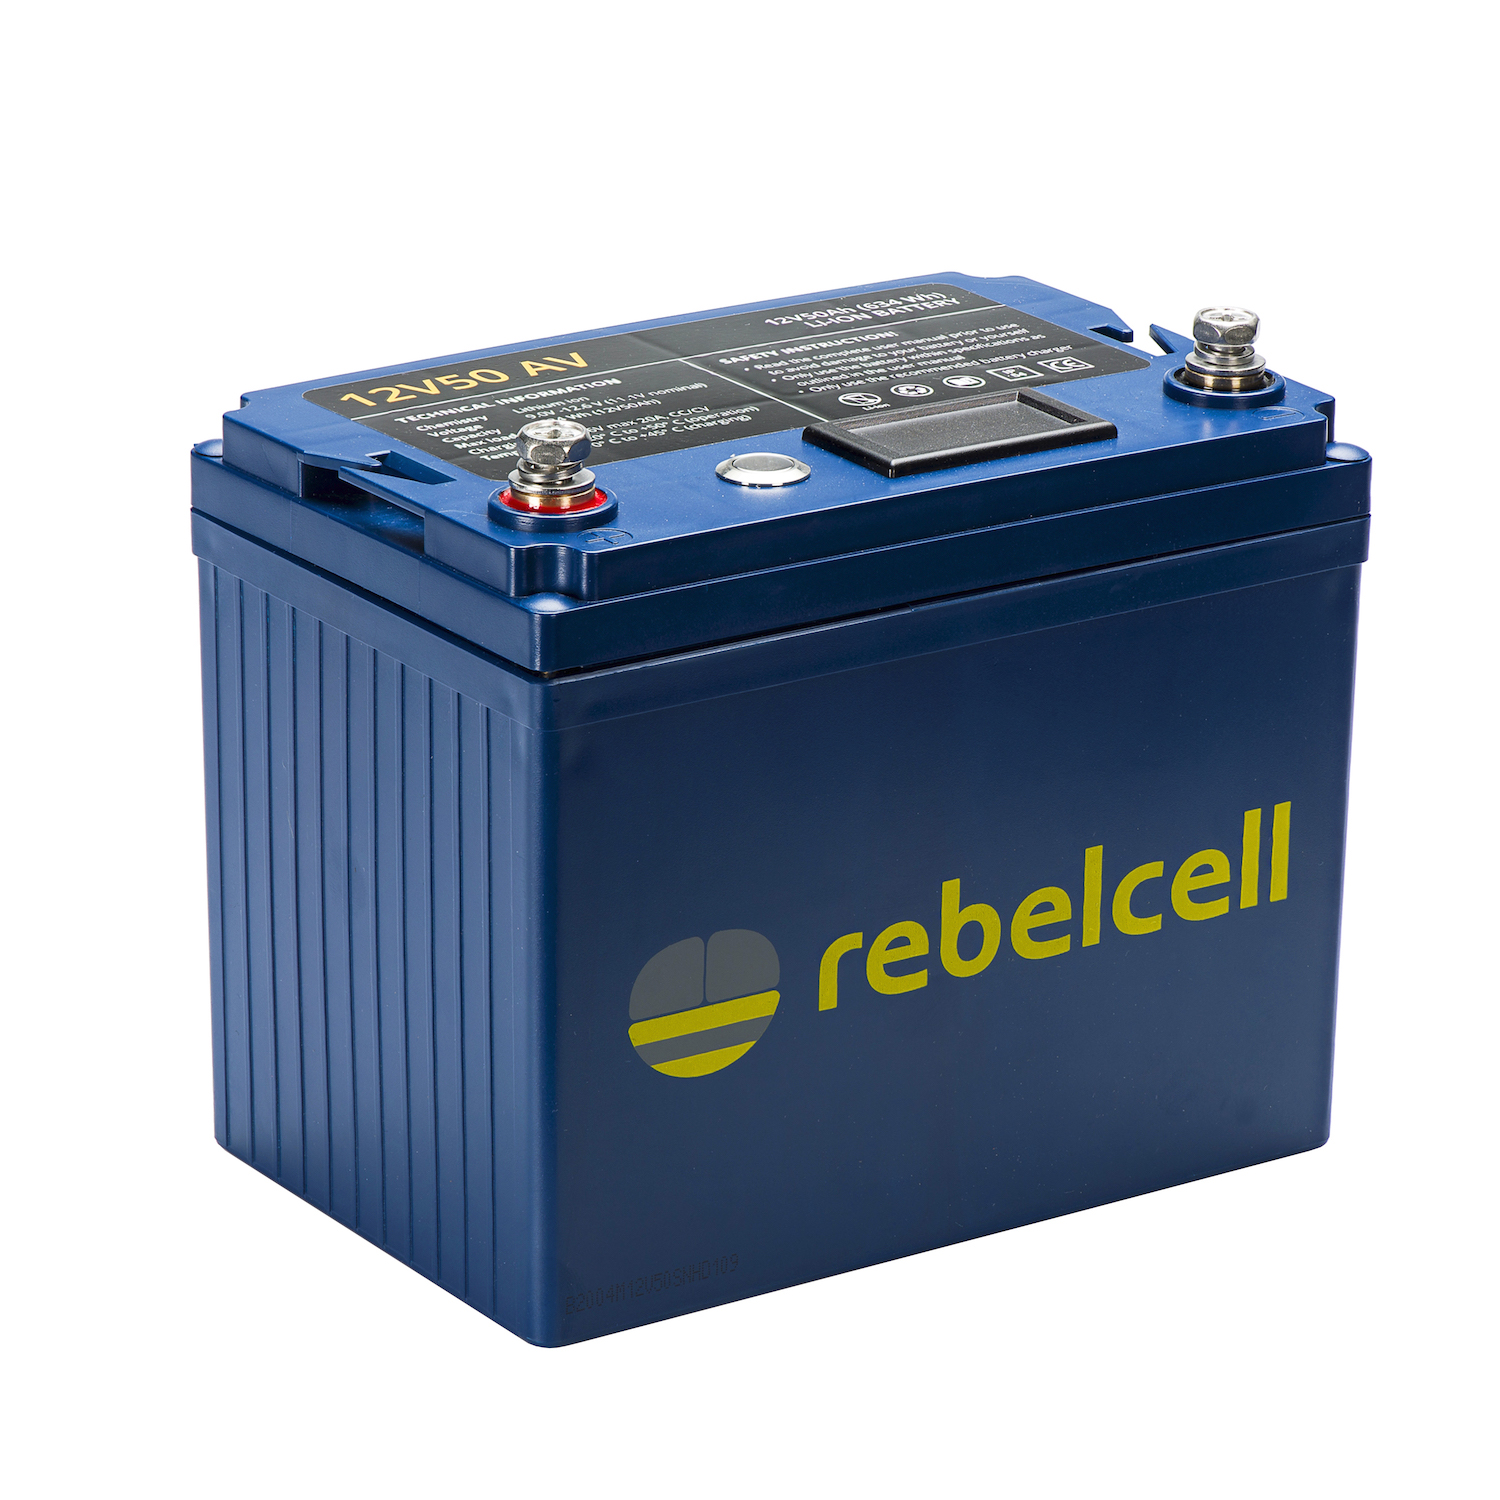 Justitie auditorium sticker 12 volt 50Ah Lithium accu | Rebelcell | Portable energie voor buiten